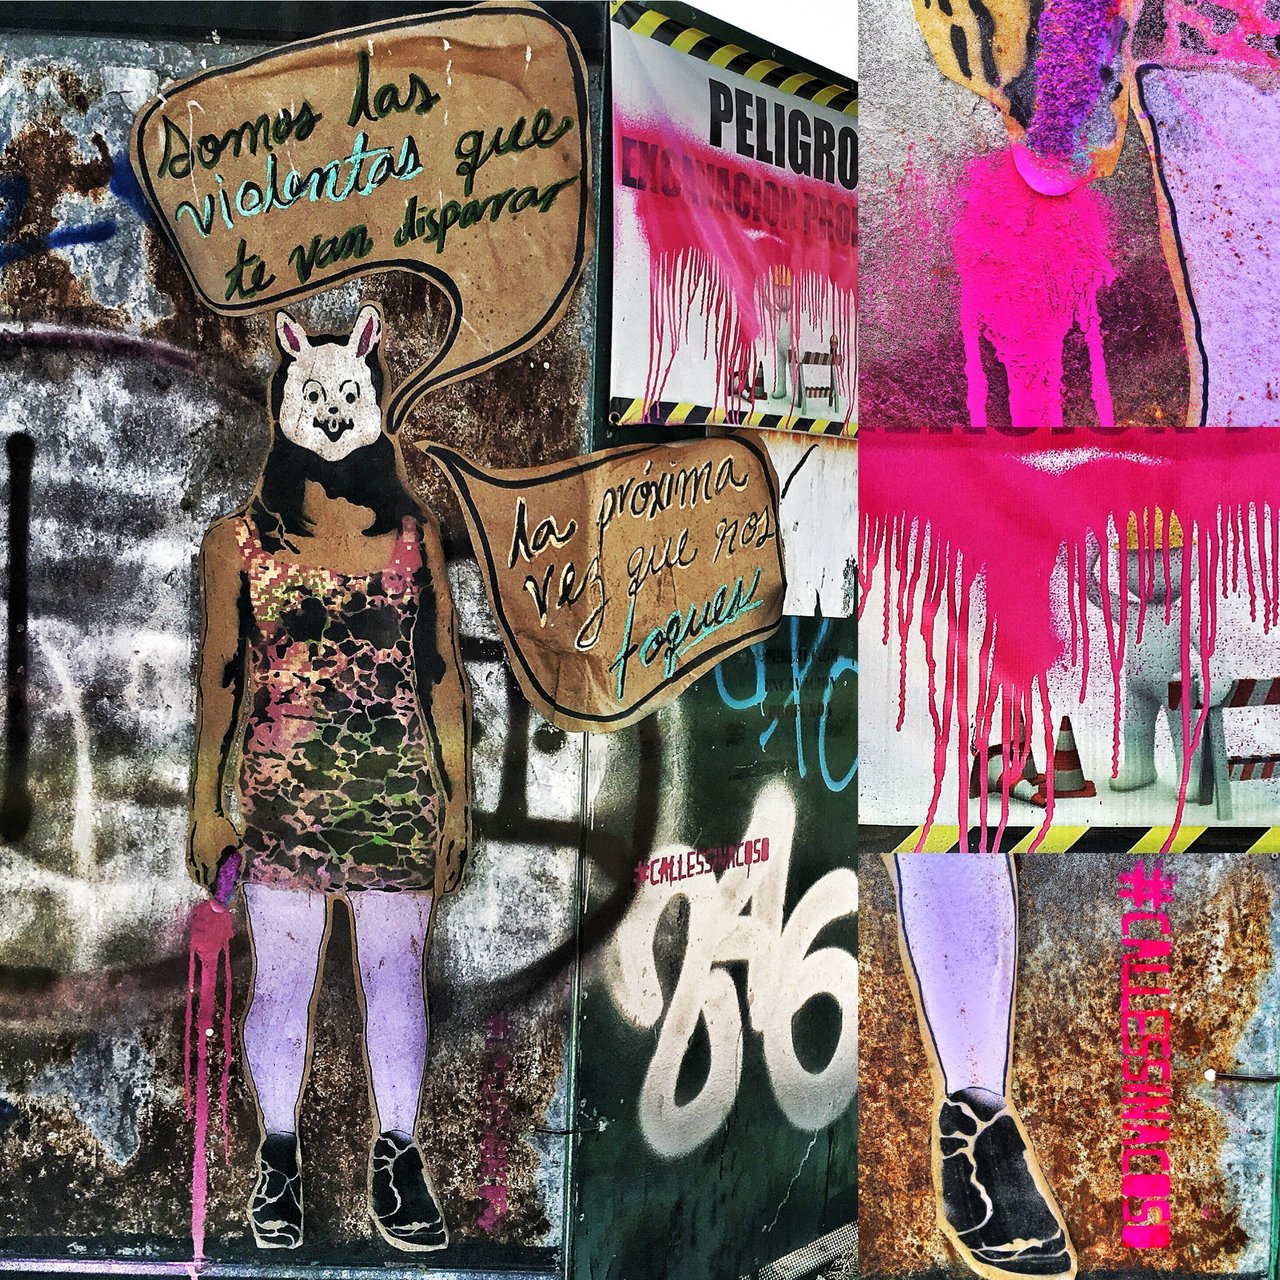 #NuestraVenganzaEsSerFelices arte urbano contra el acoso callejero con @LasHijasdeV #RexisteMX #StreetArt #Graffiti https://t.co/qLE8q4GNxs